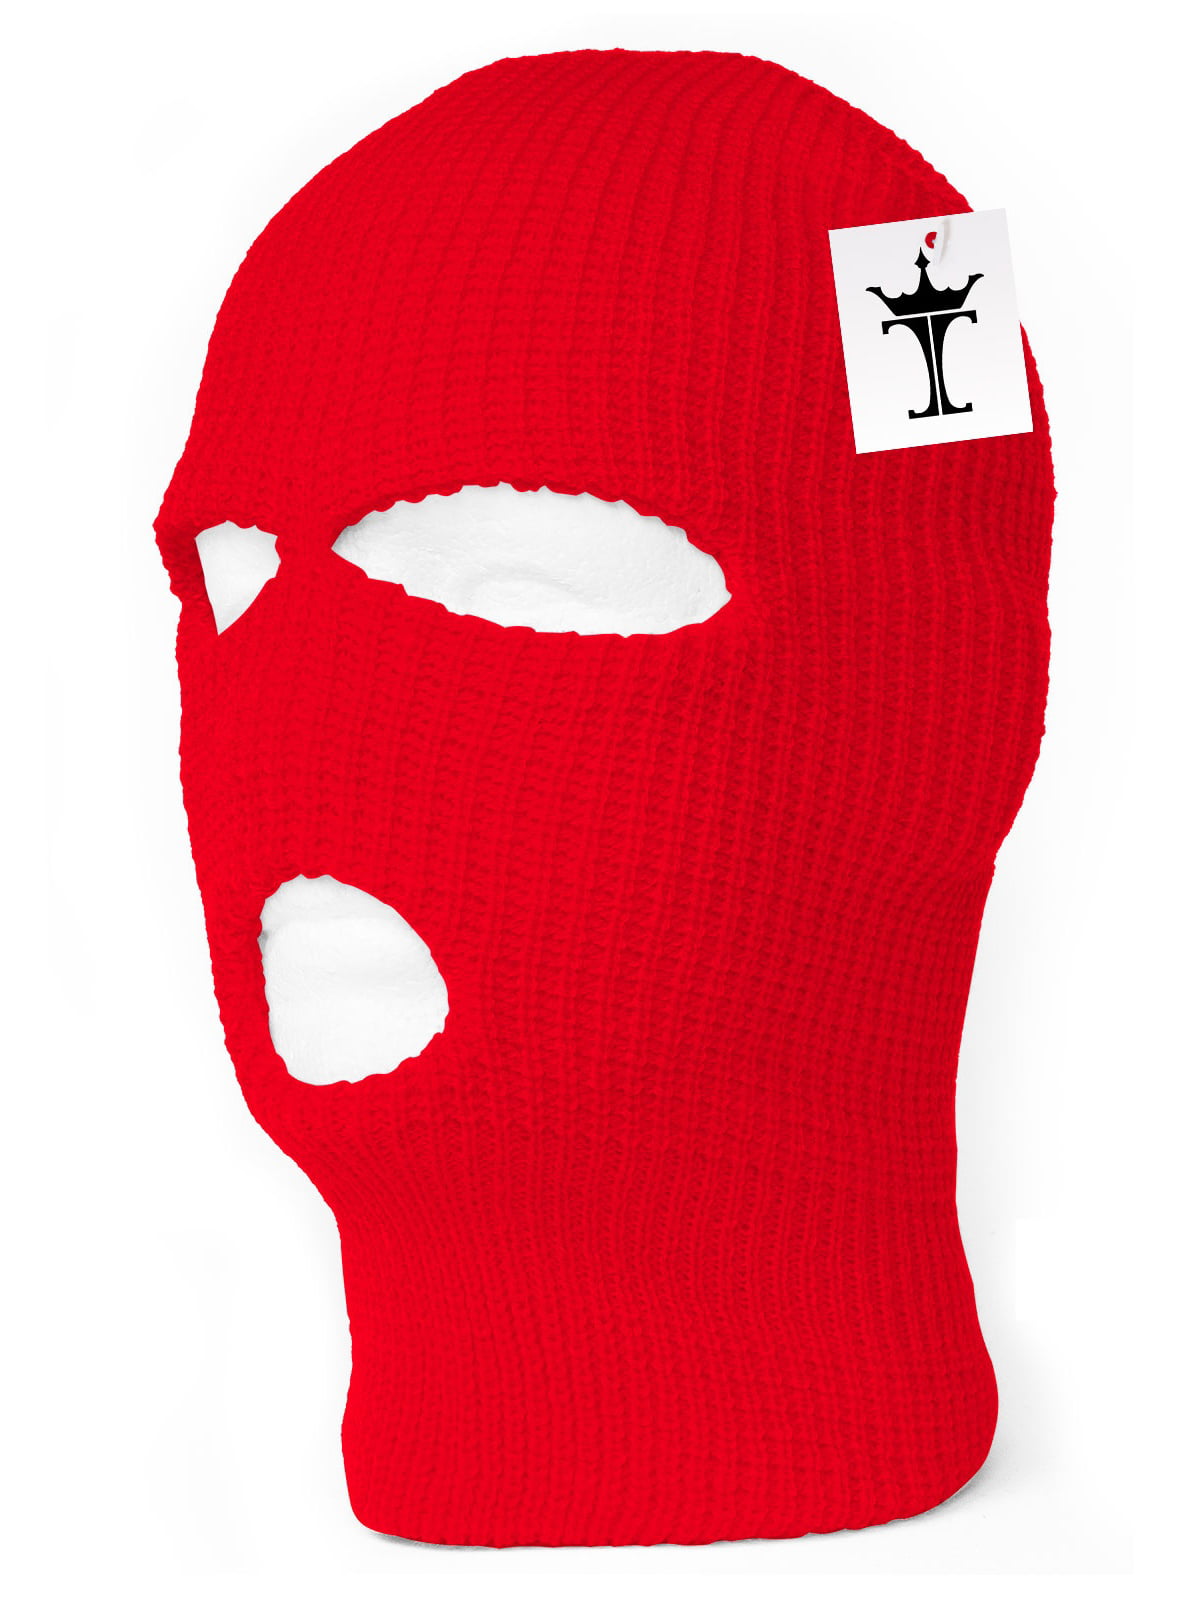 Red Three Holed Mask - Walmart.com